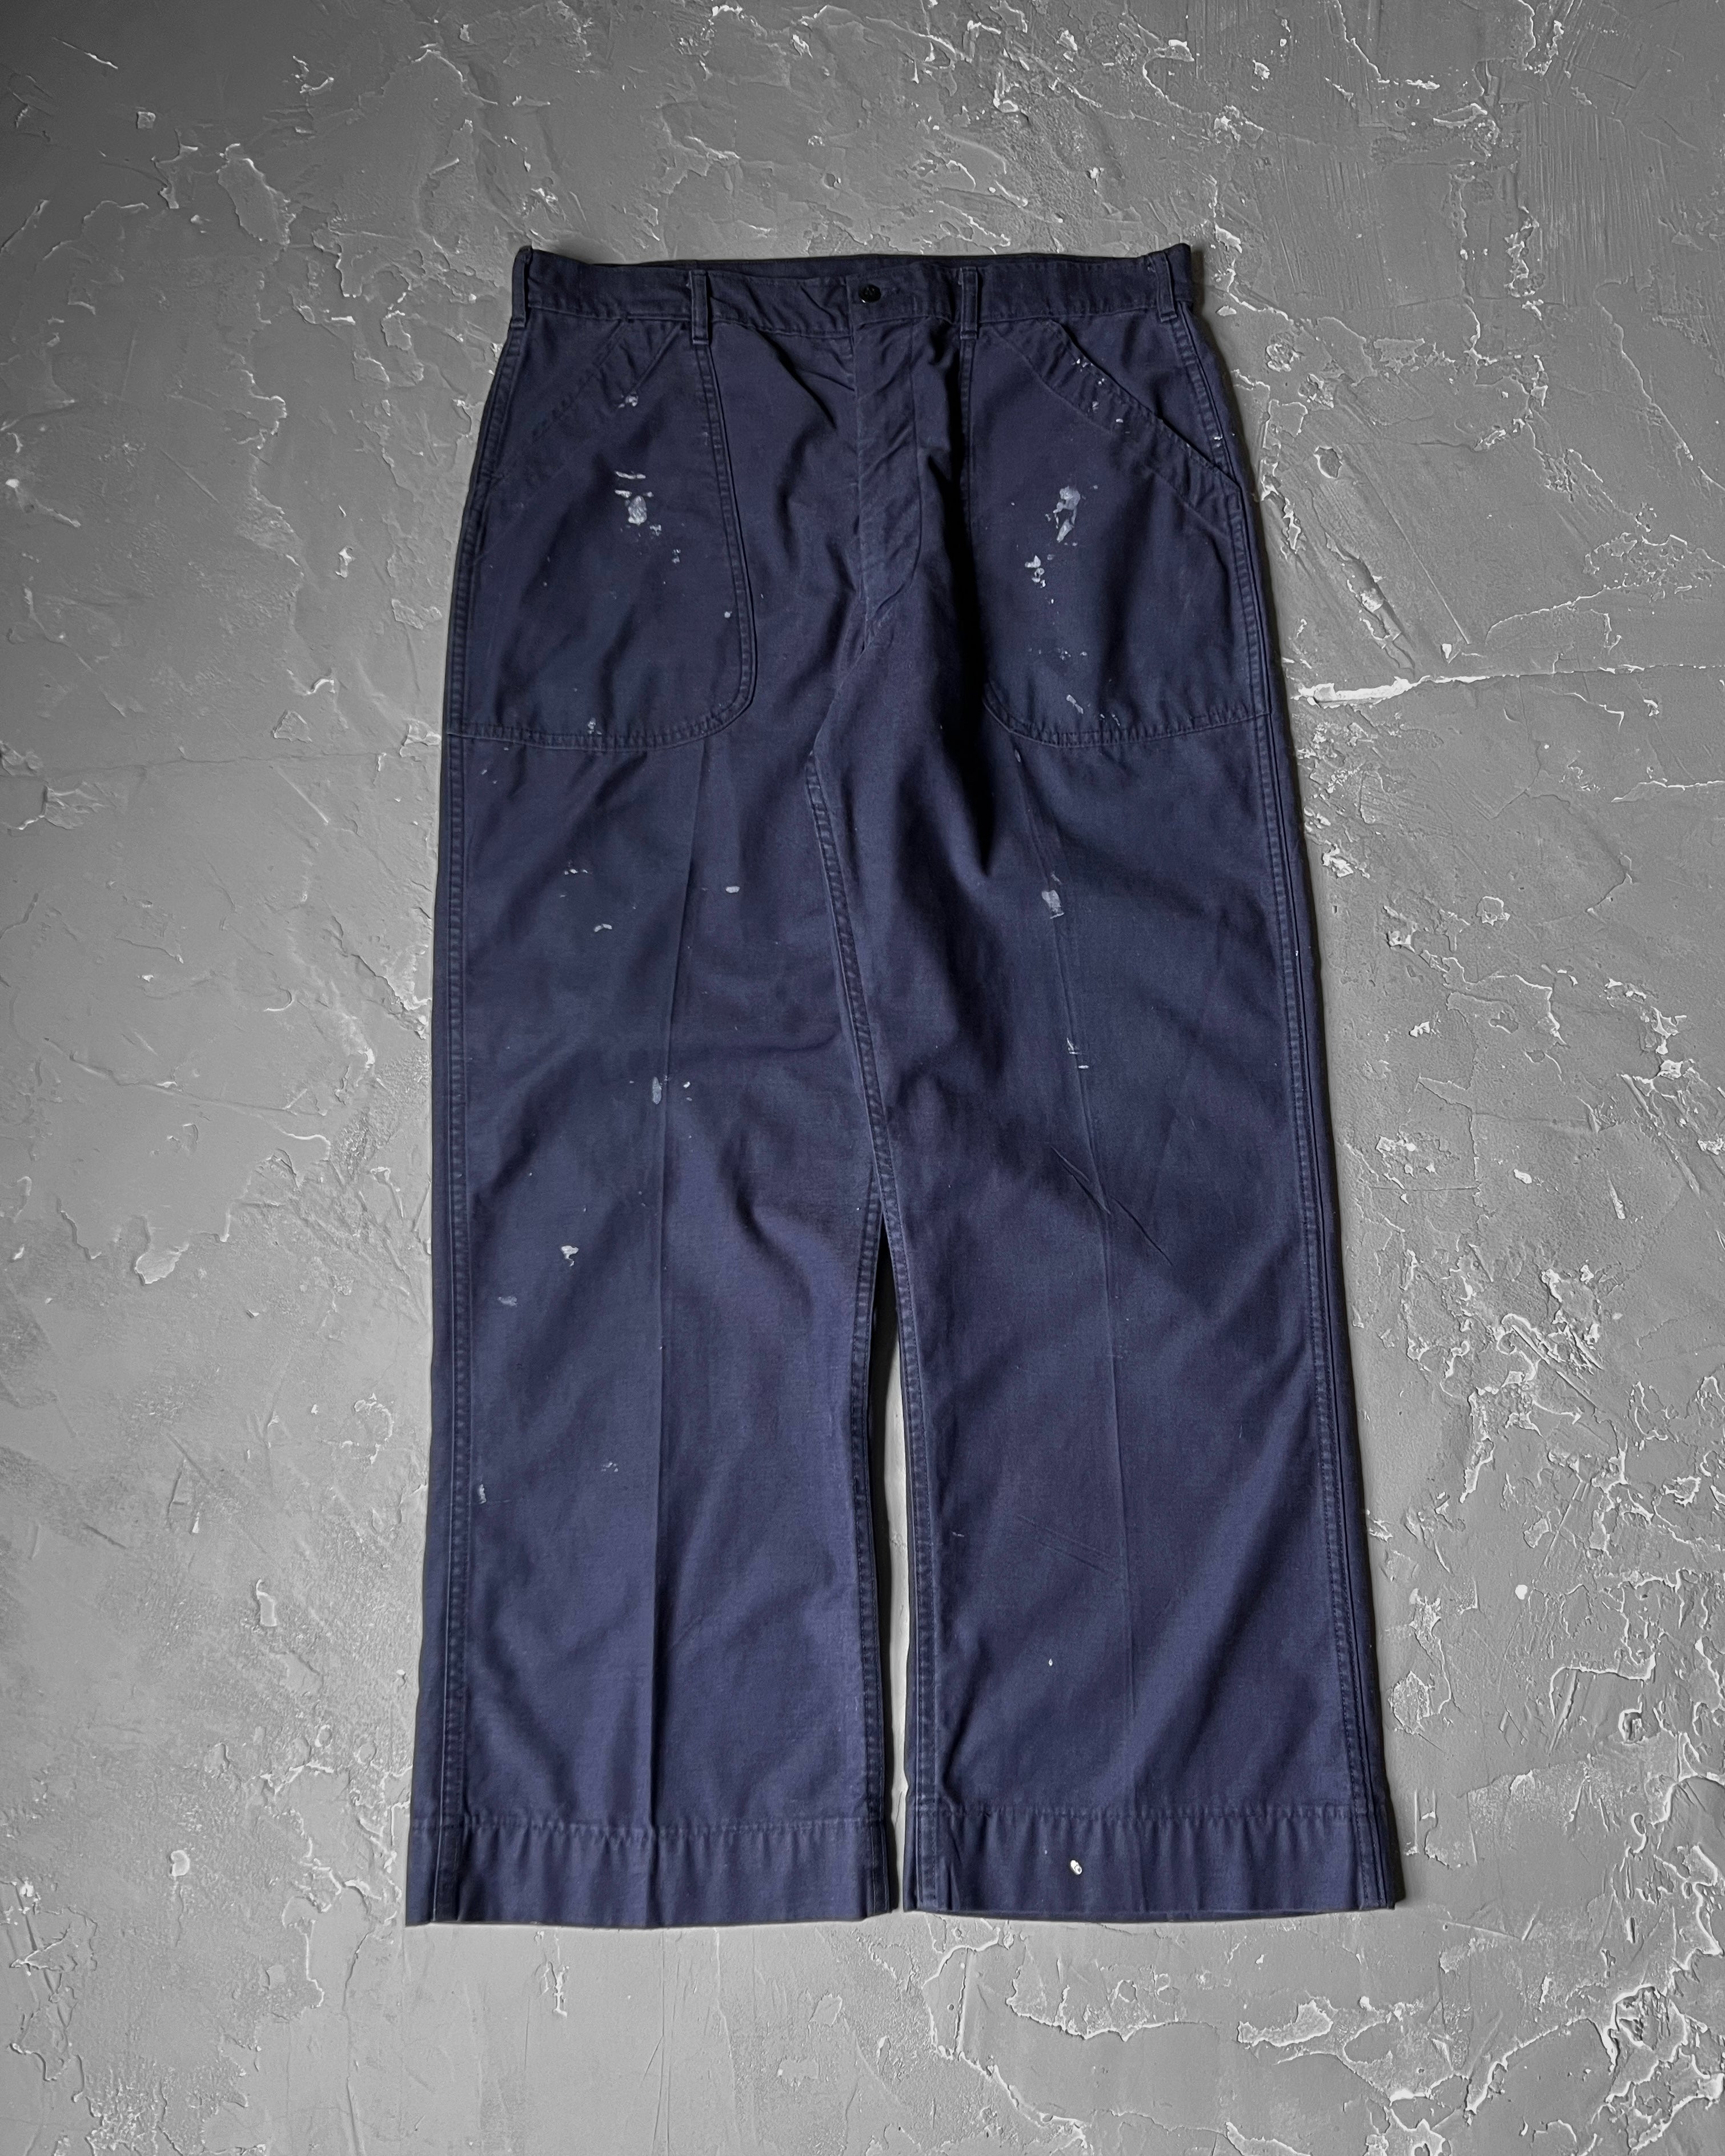 1972 Vietnam War Navy Utility Pants [34 x 30]